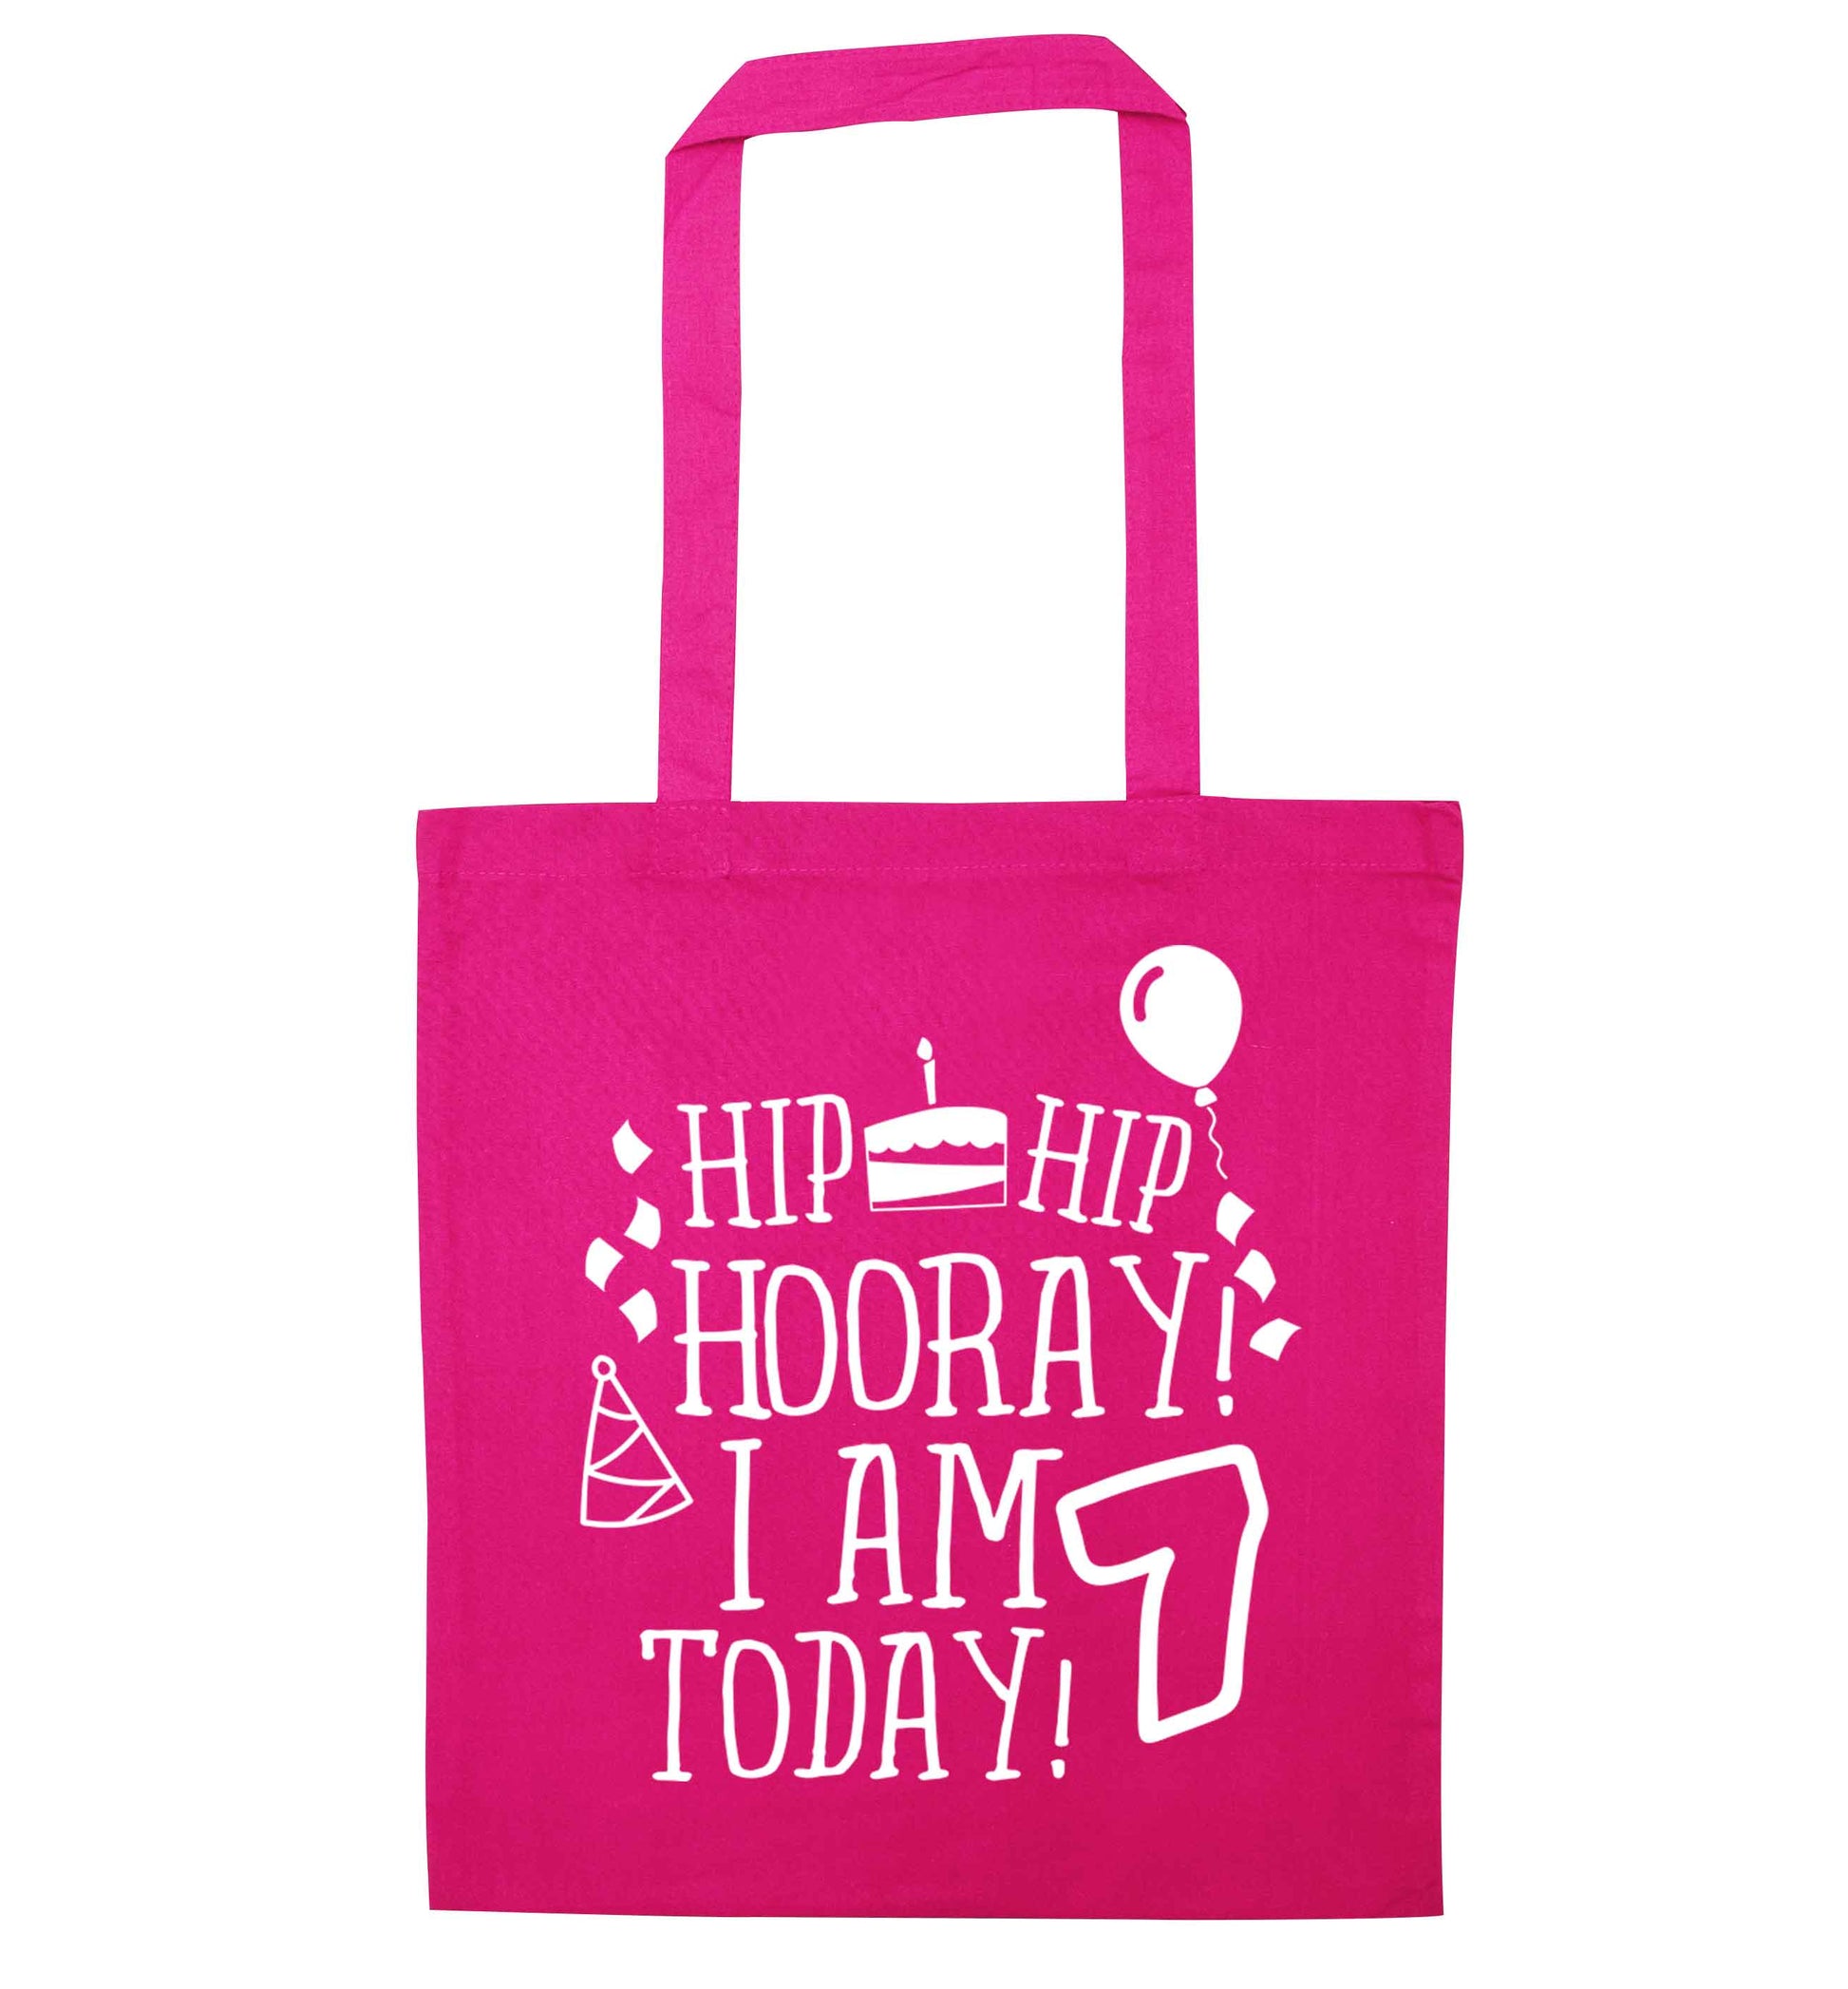 Hip hip I am seven today! pink tote bag